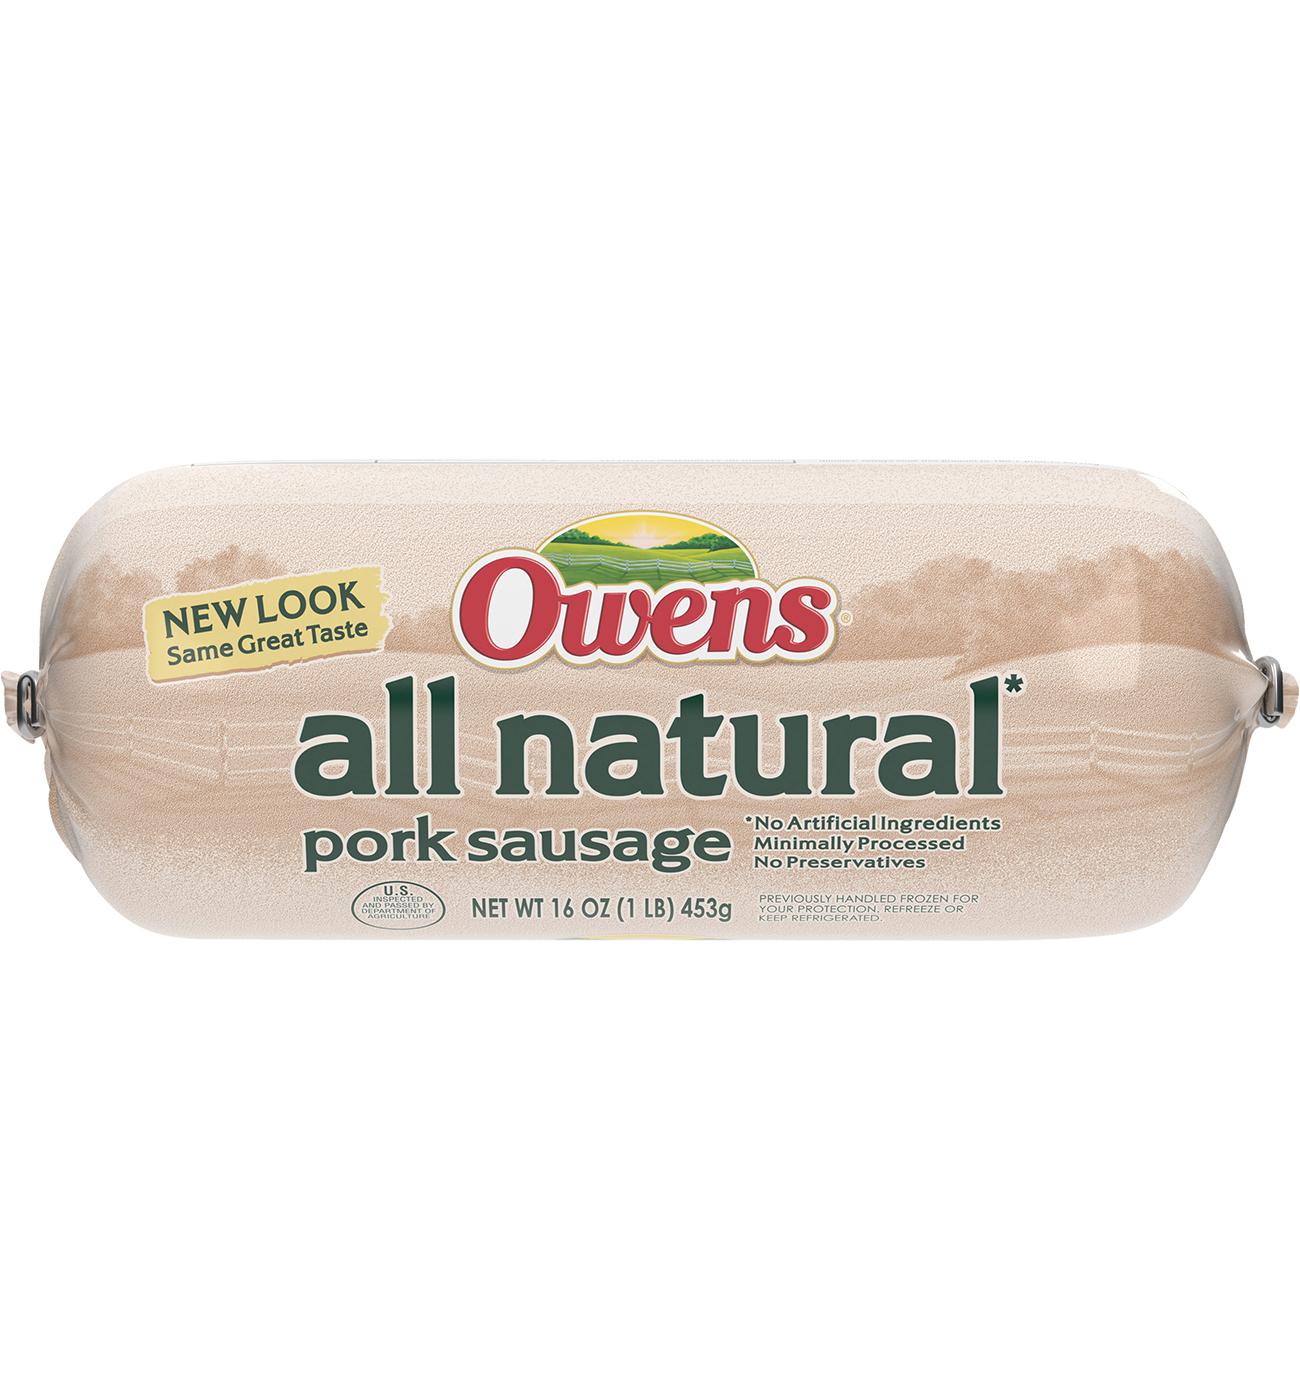 Owens All Natural Pork Breakfast Sausage - Original; image 1 of 2